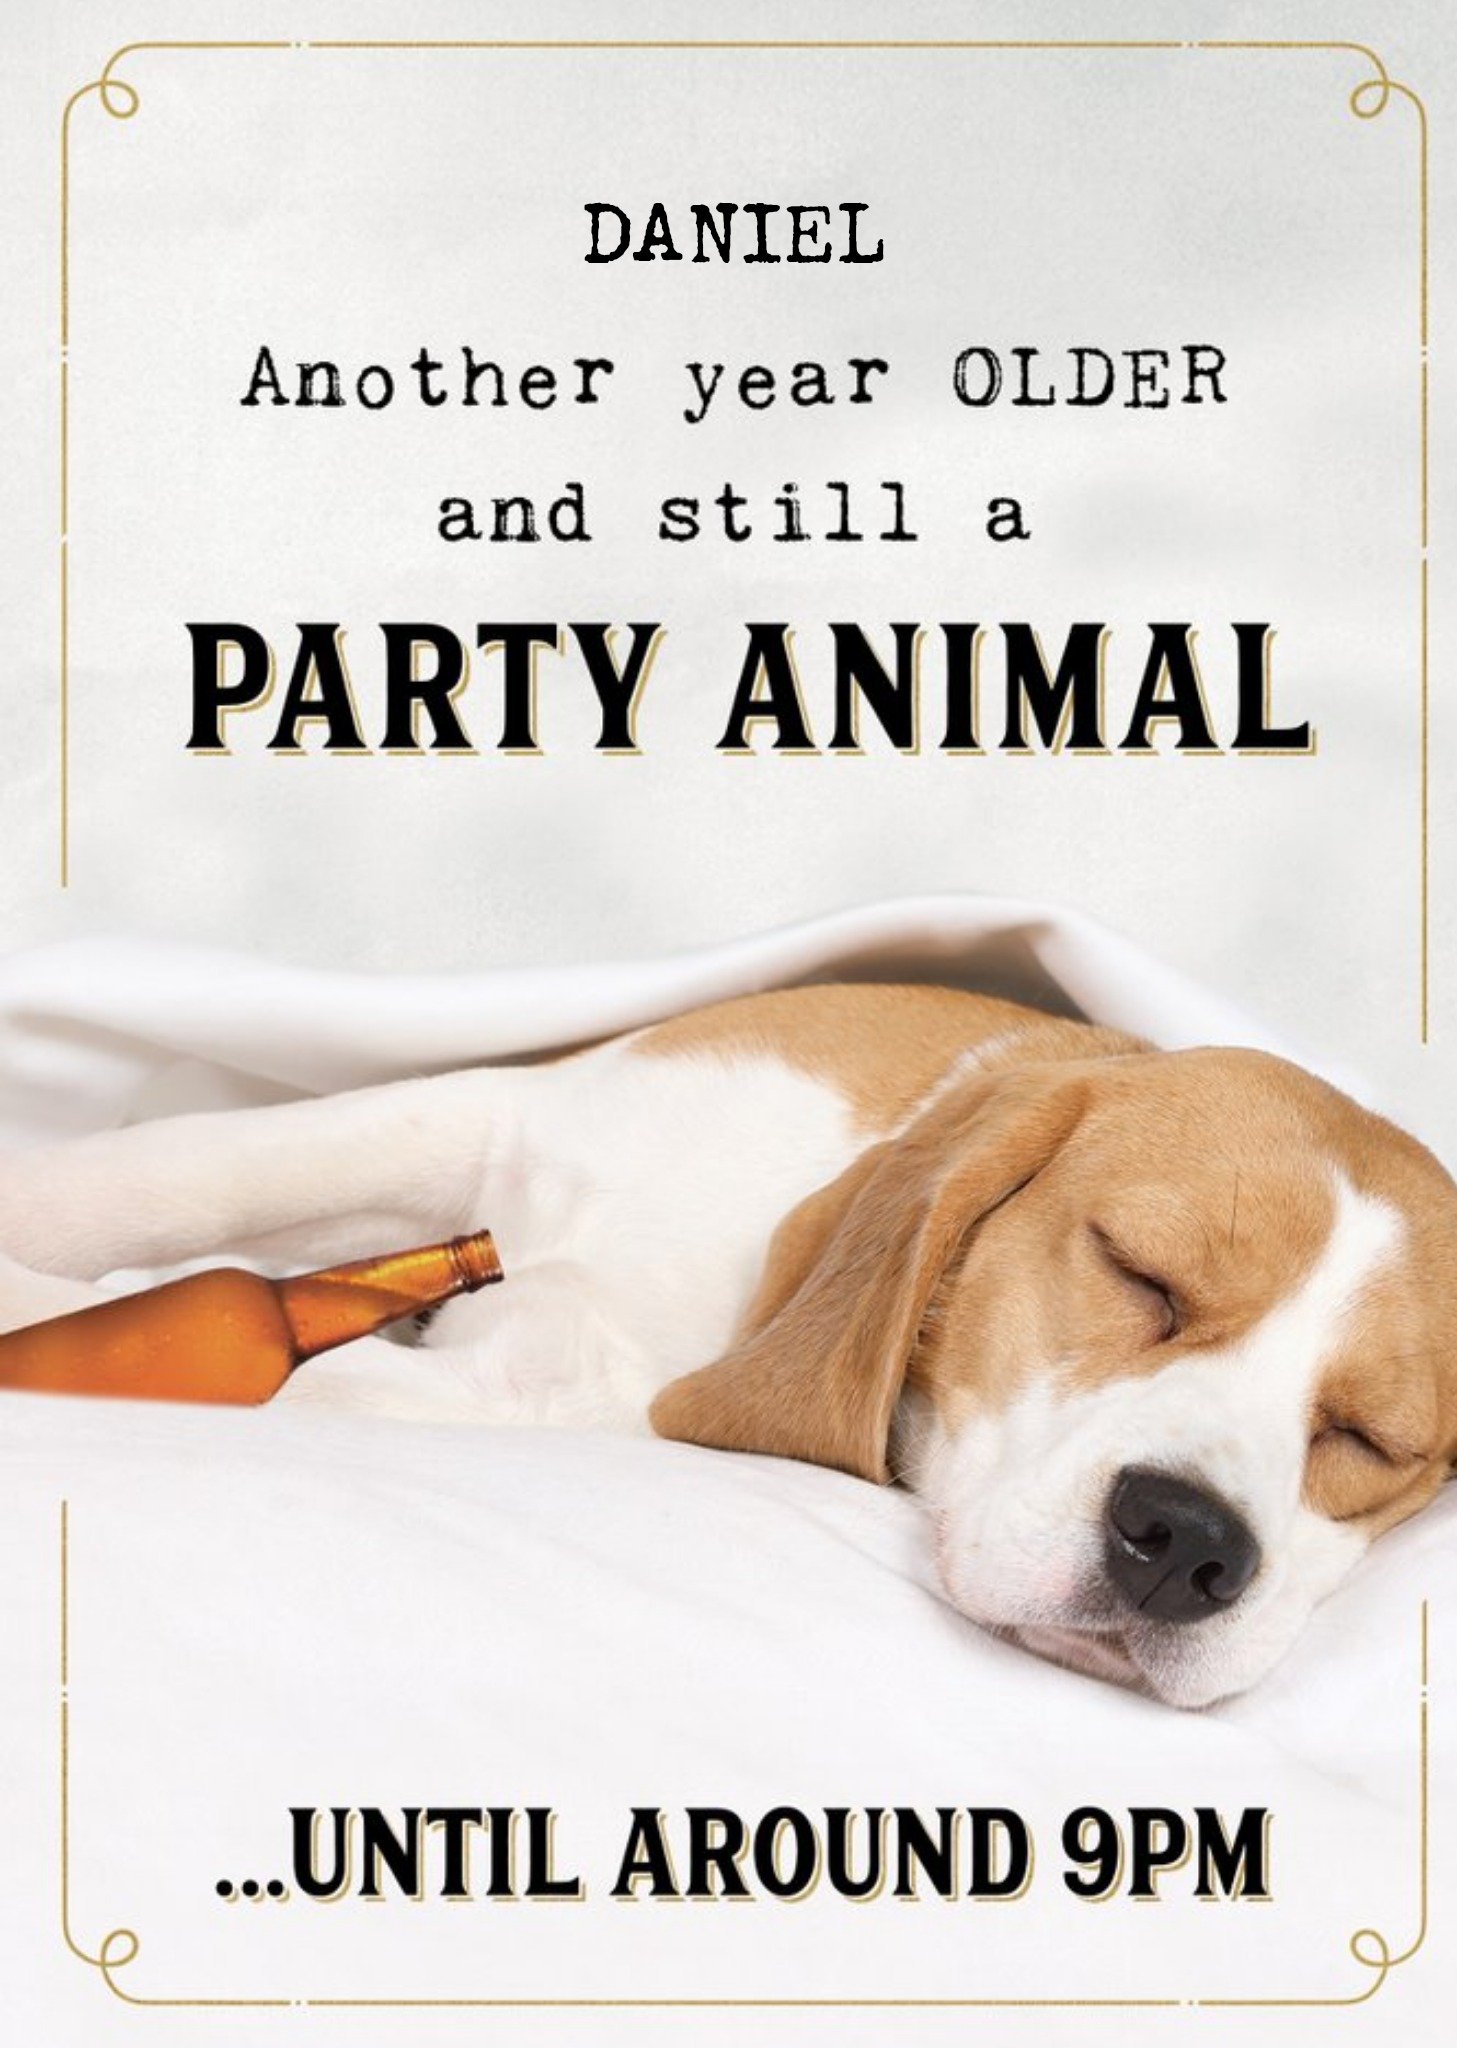 Friends Humorous Photographic Sleeping Dog Birthday Card, Large